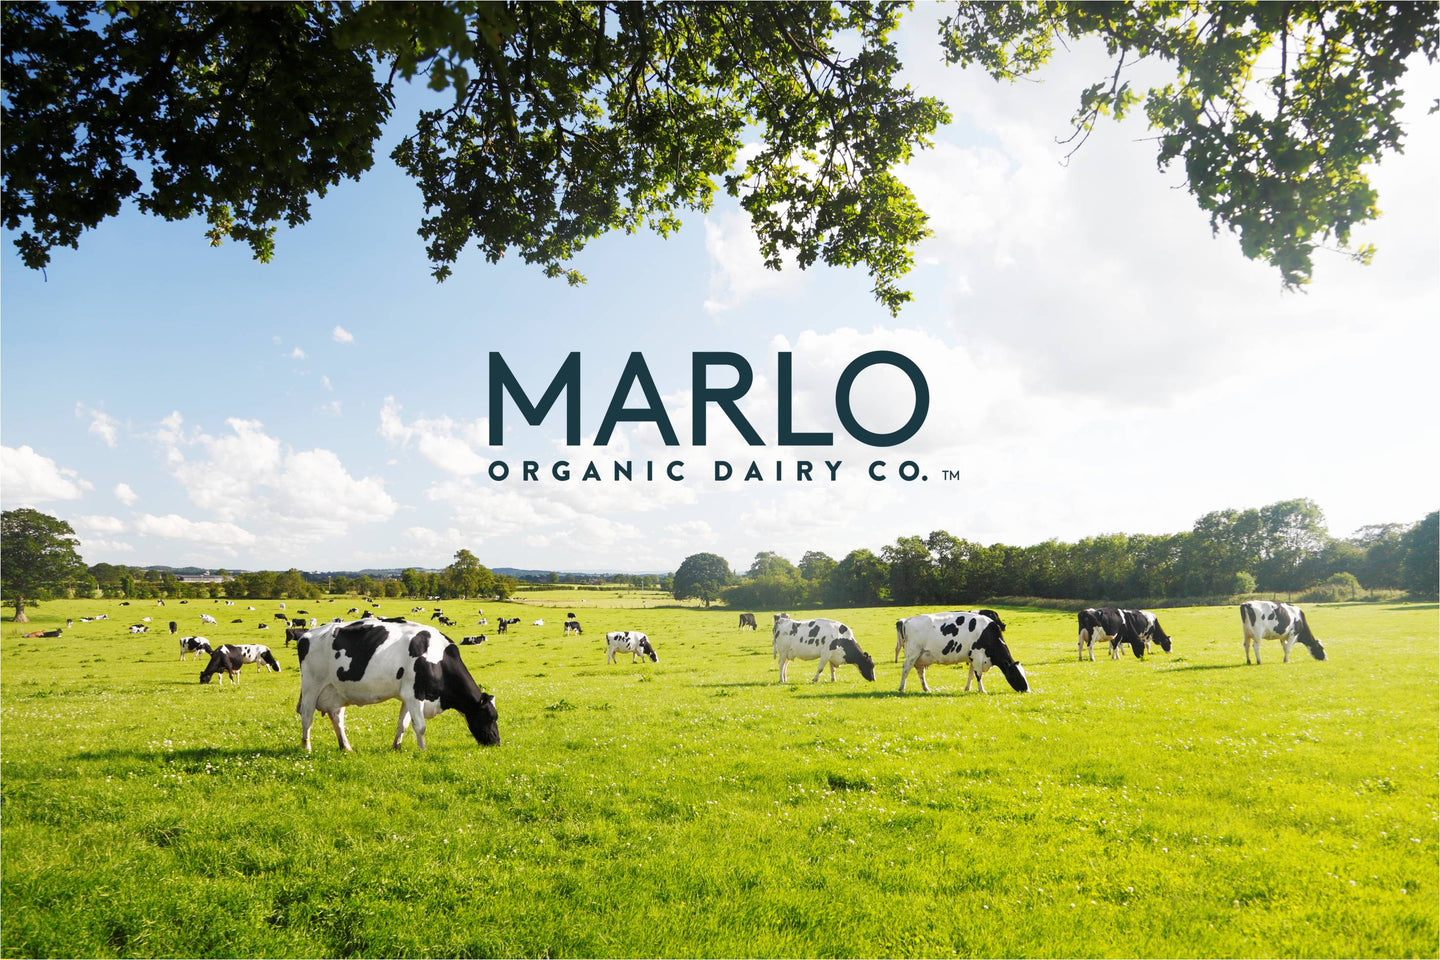 Marlo Organic Dairy Co.